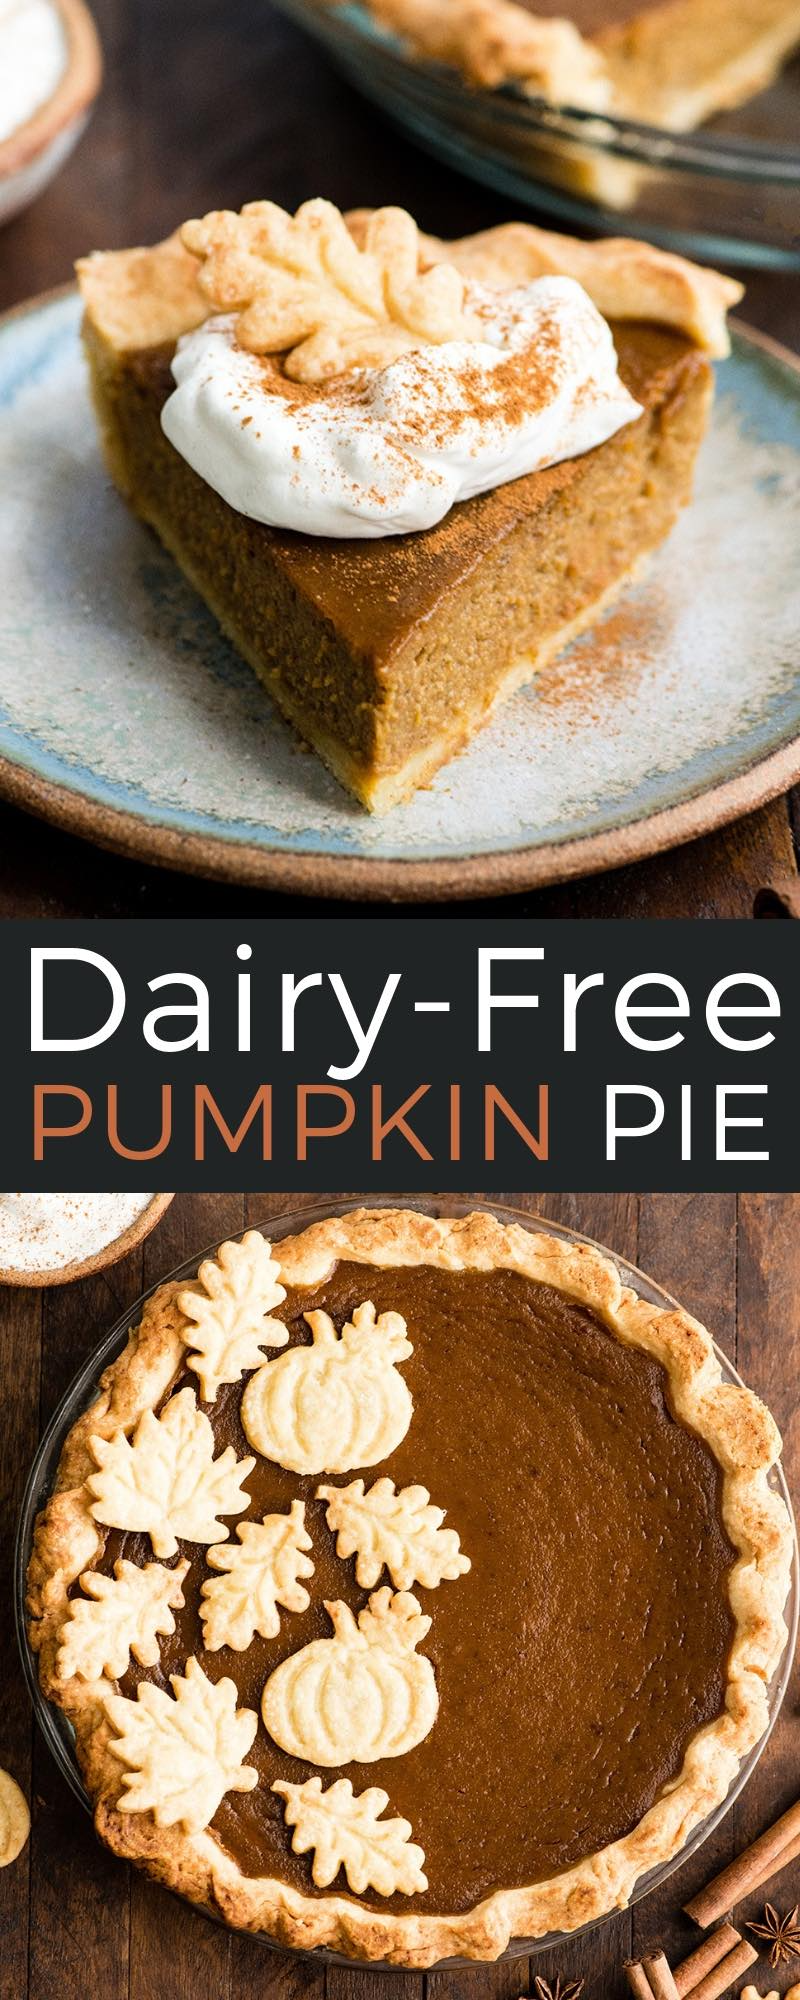 18 pumpkin pie recipe from scratch vegan ideas